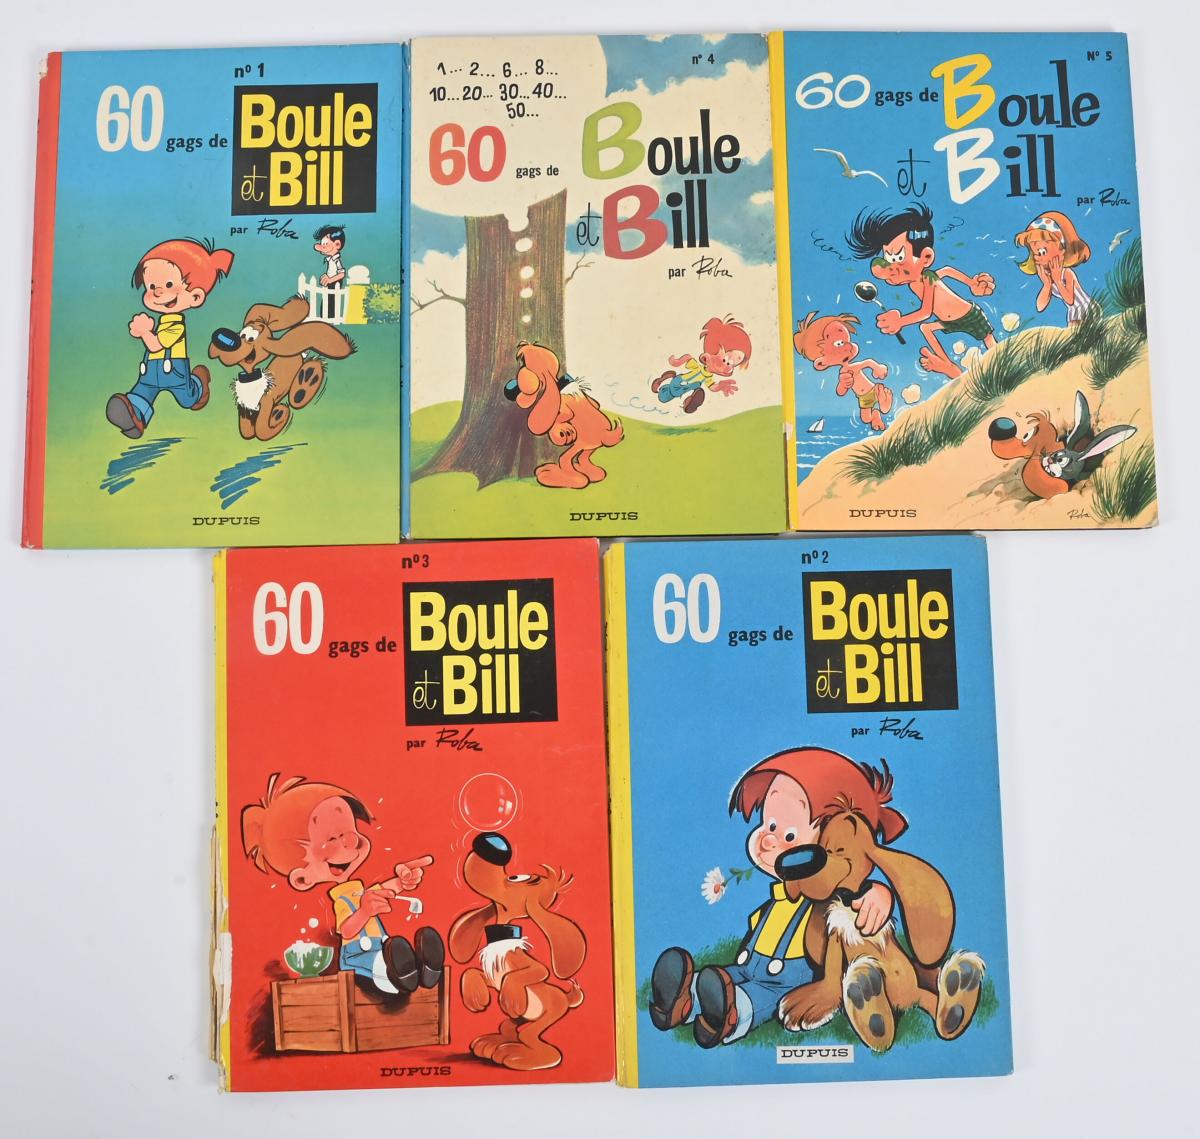 Boule et Bill - 60 gags de Boule et Bill n° 4 - EO 1967